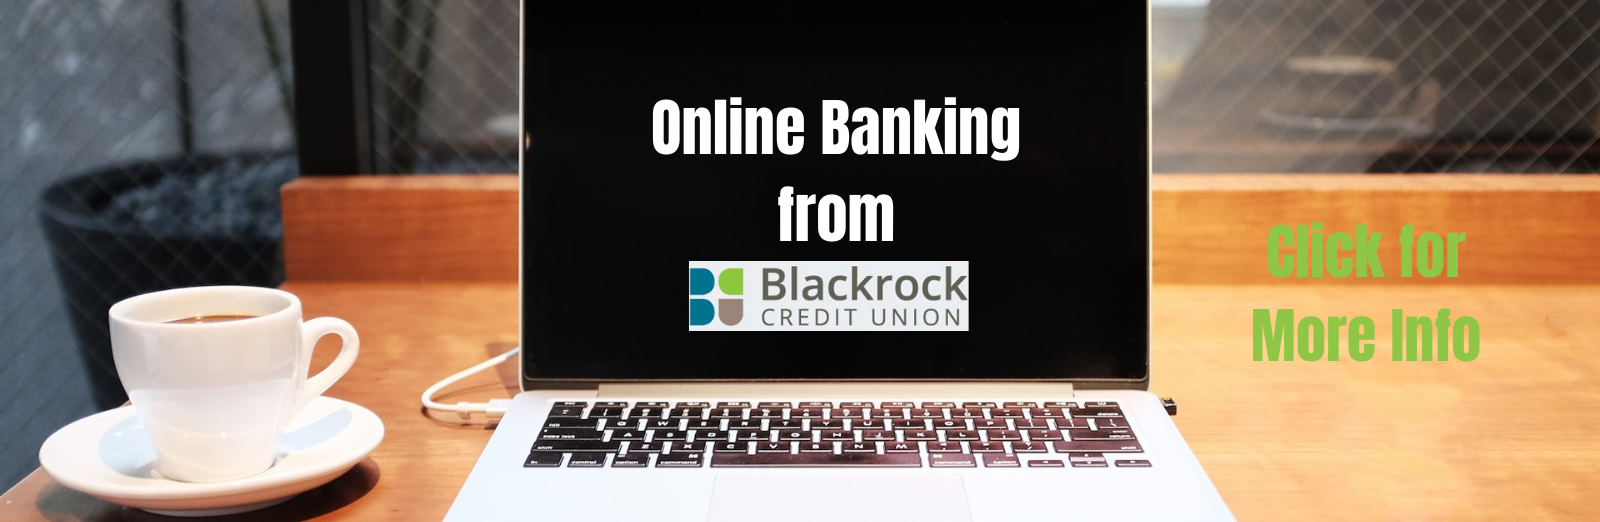 Online Banking image from Blackrock Credit Union showing laptop